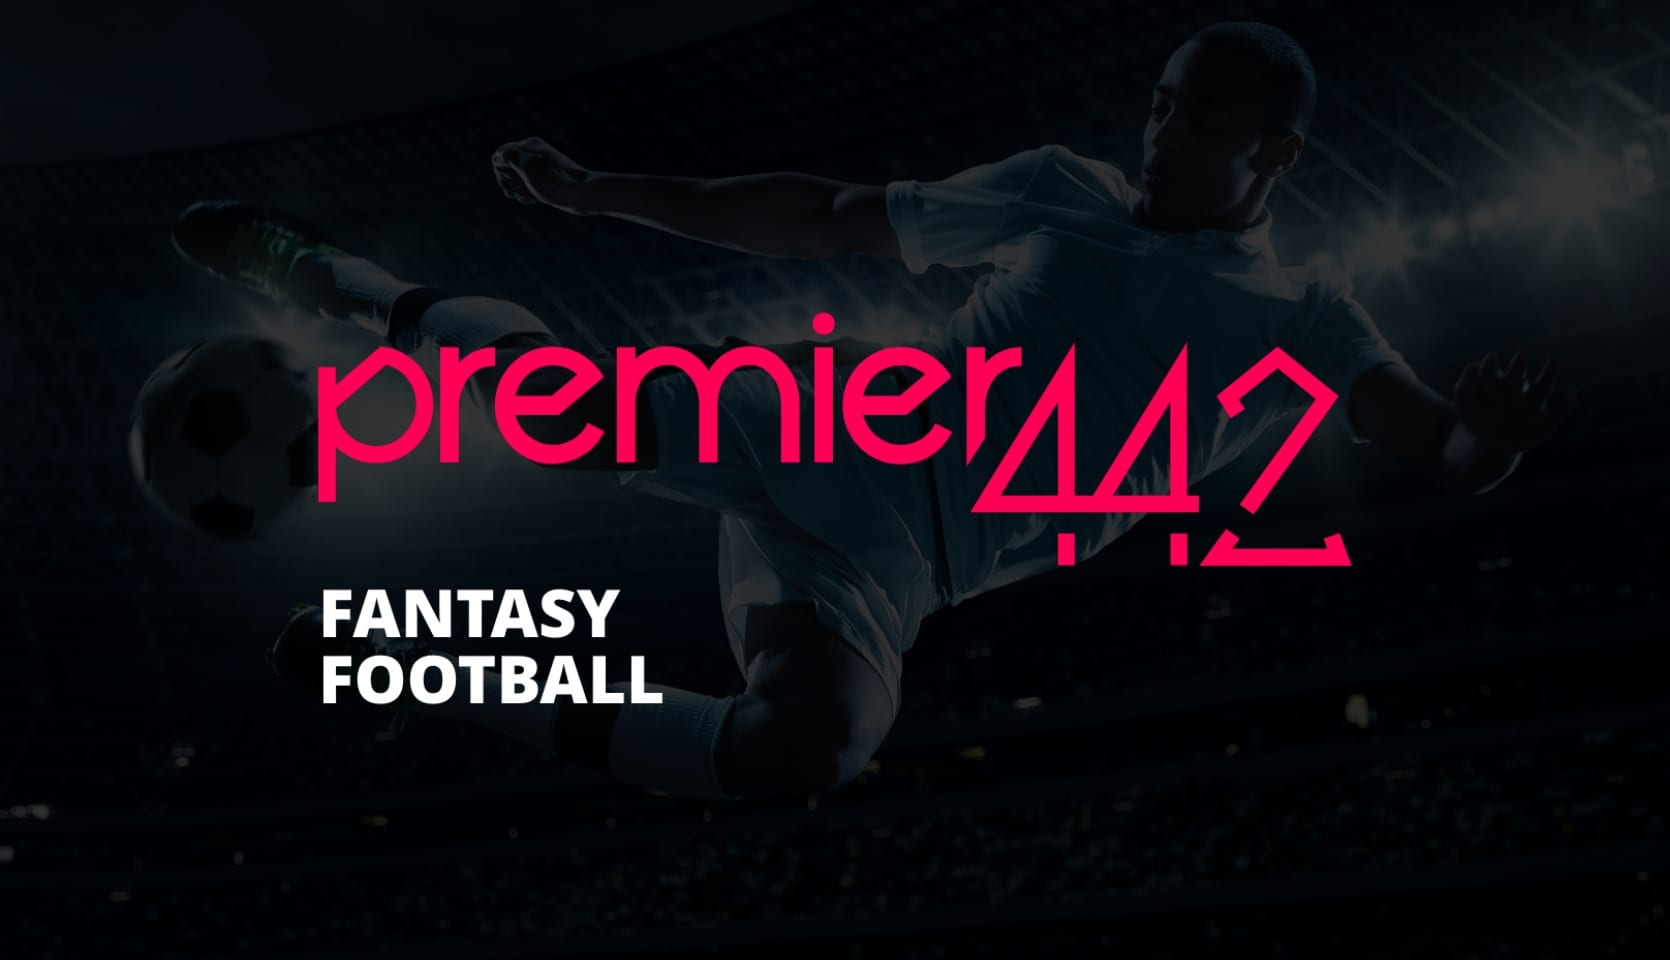 Premier442 - Fantasy Football